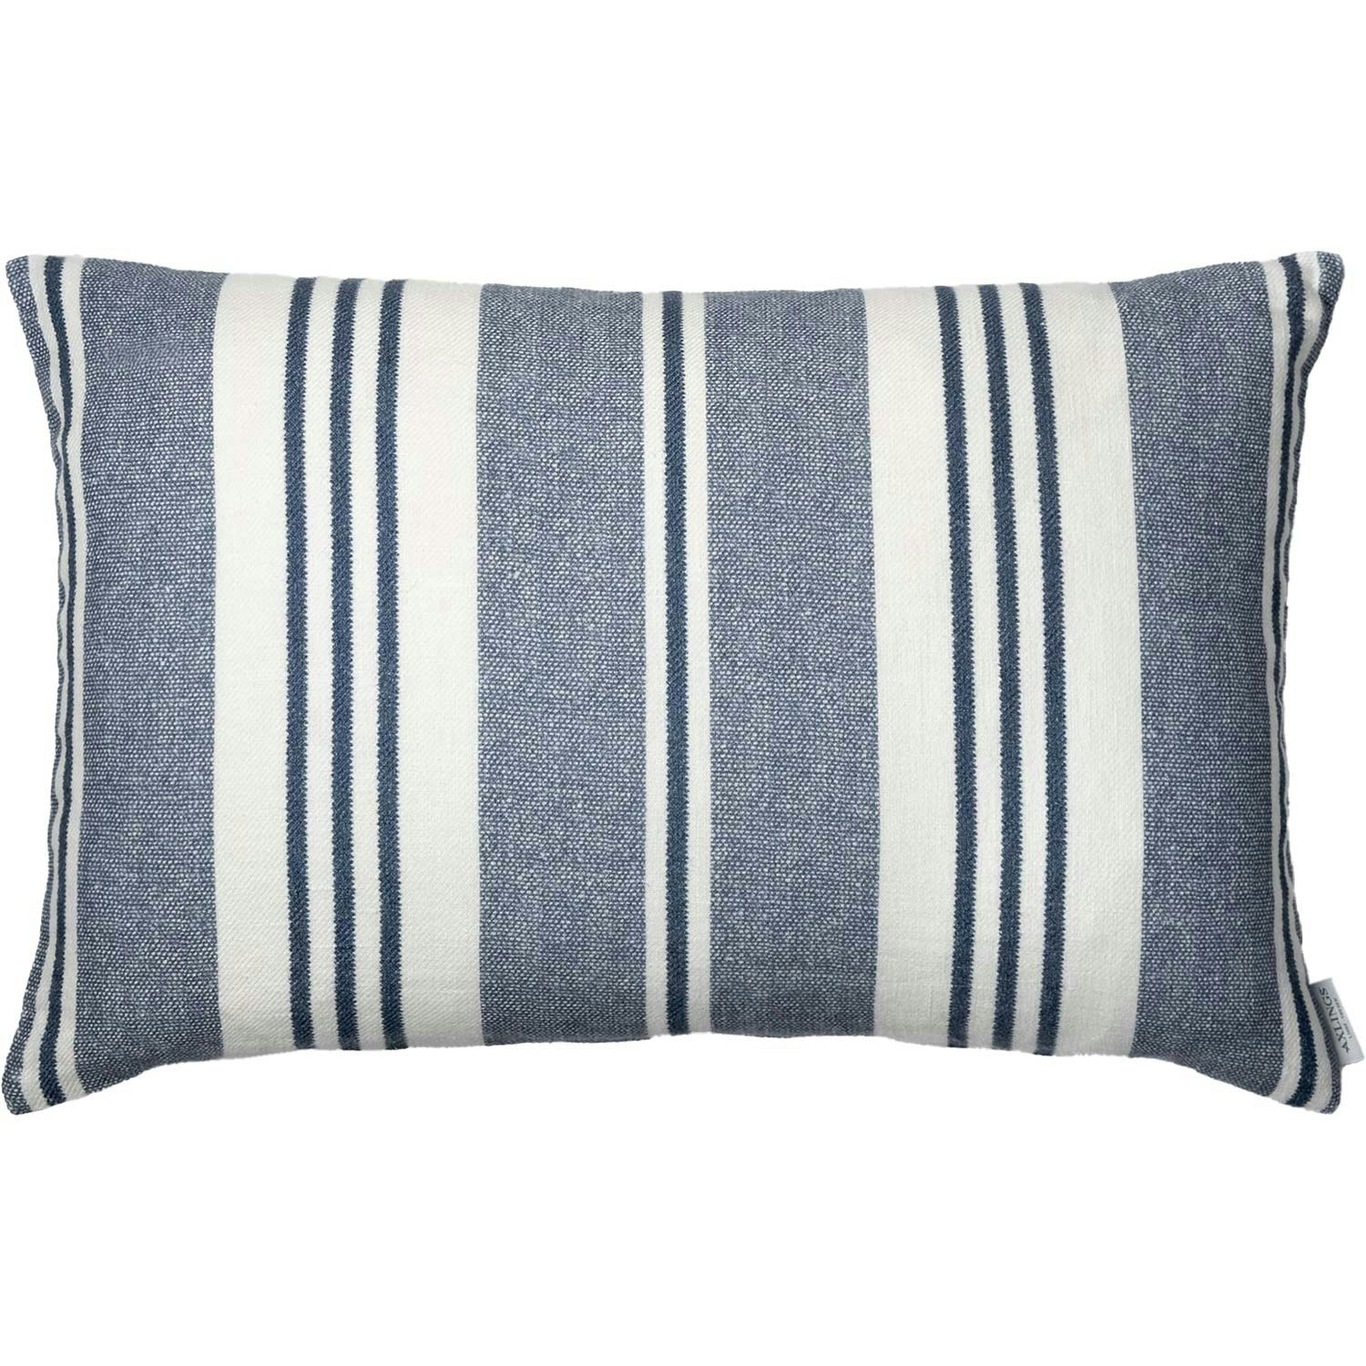 Vändteg Cushion Cover 40x60 cm, Marine/Off-white